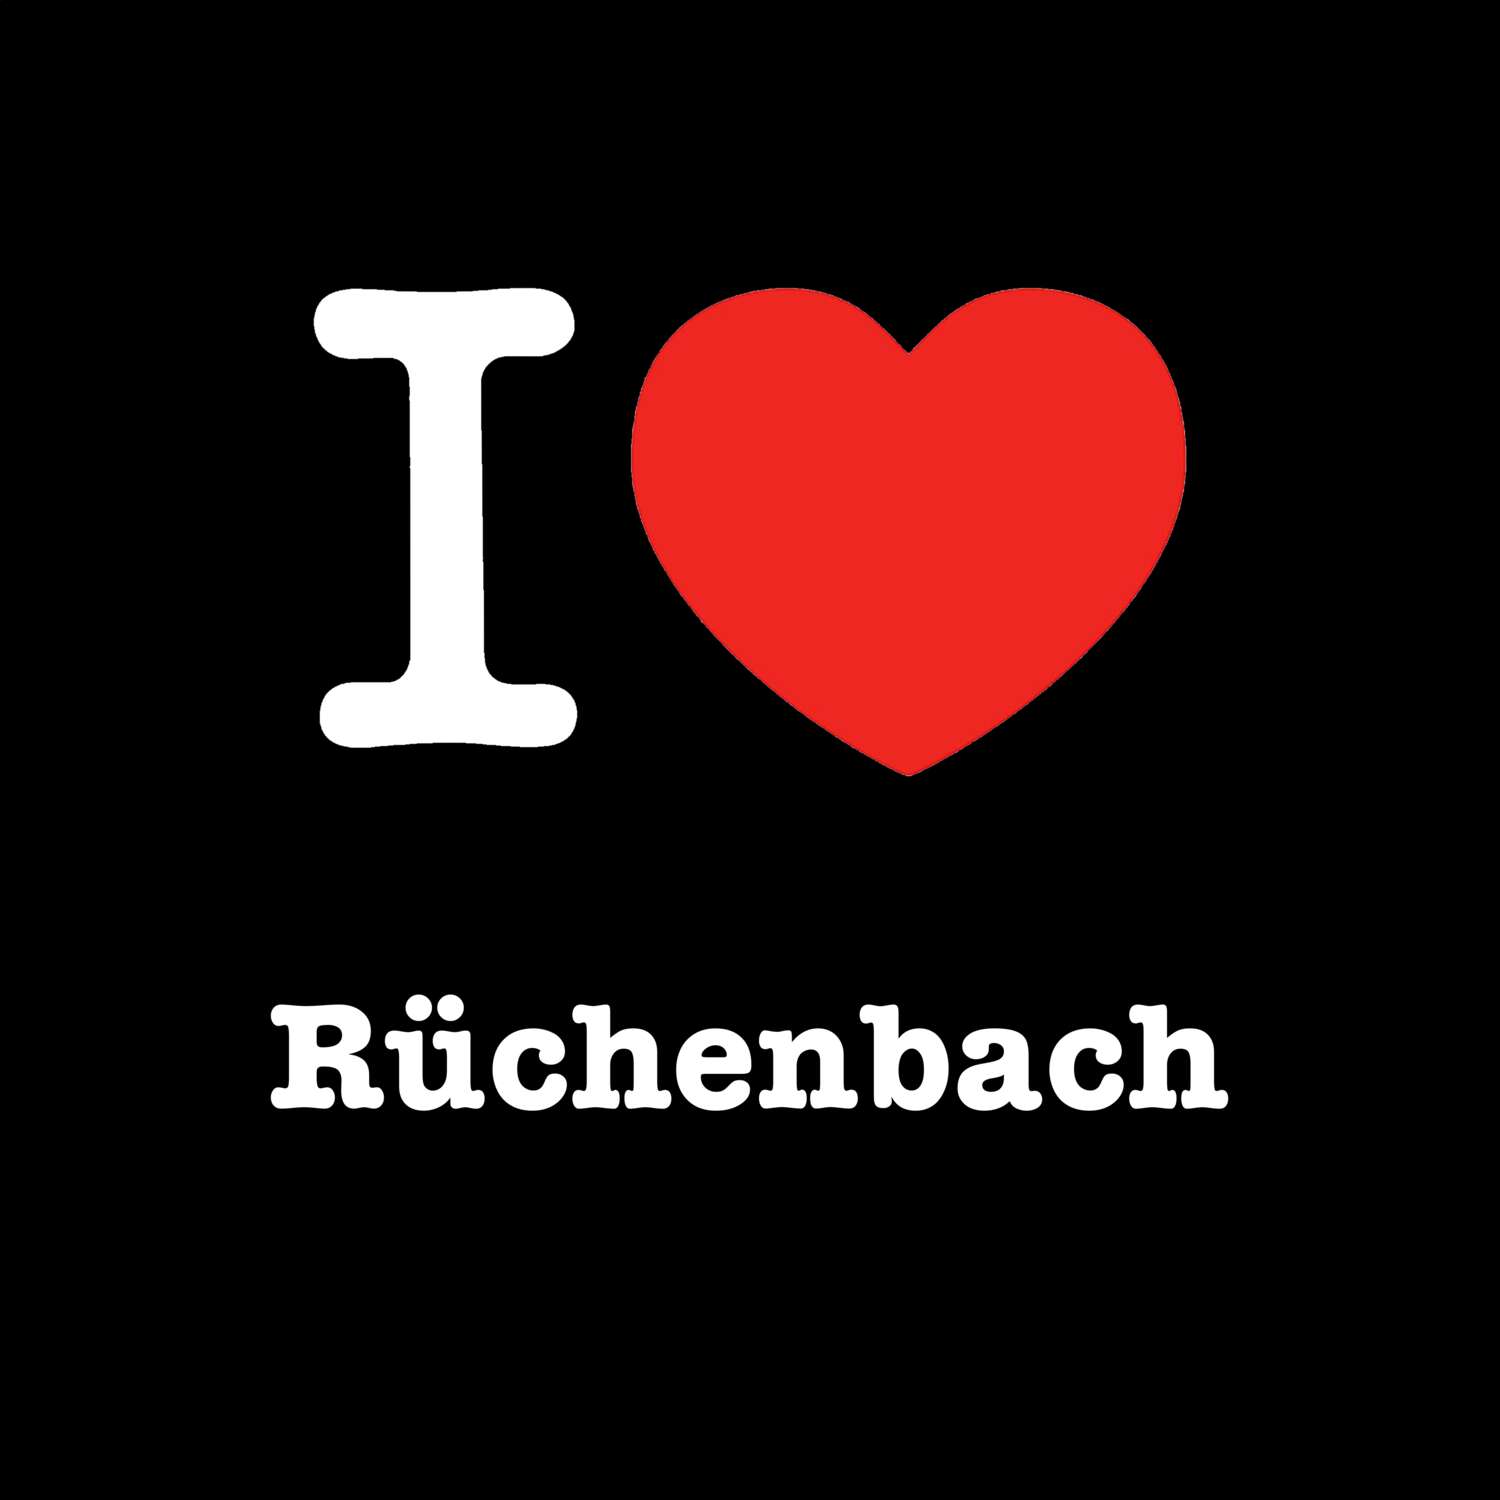 Rüchenbach T-Shirt »I love«